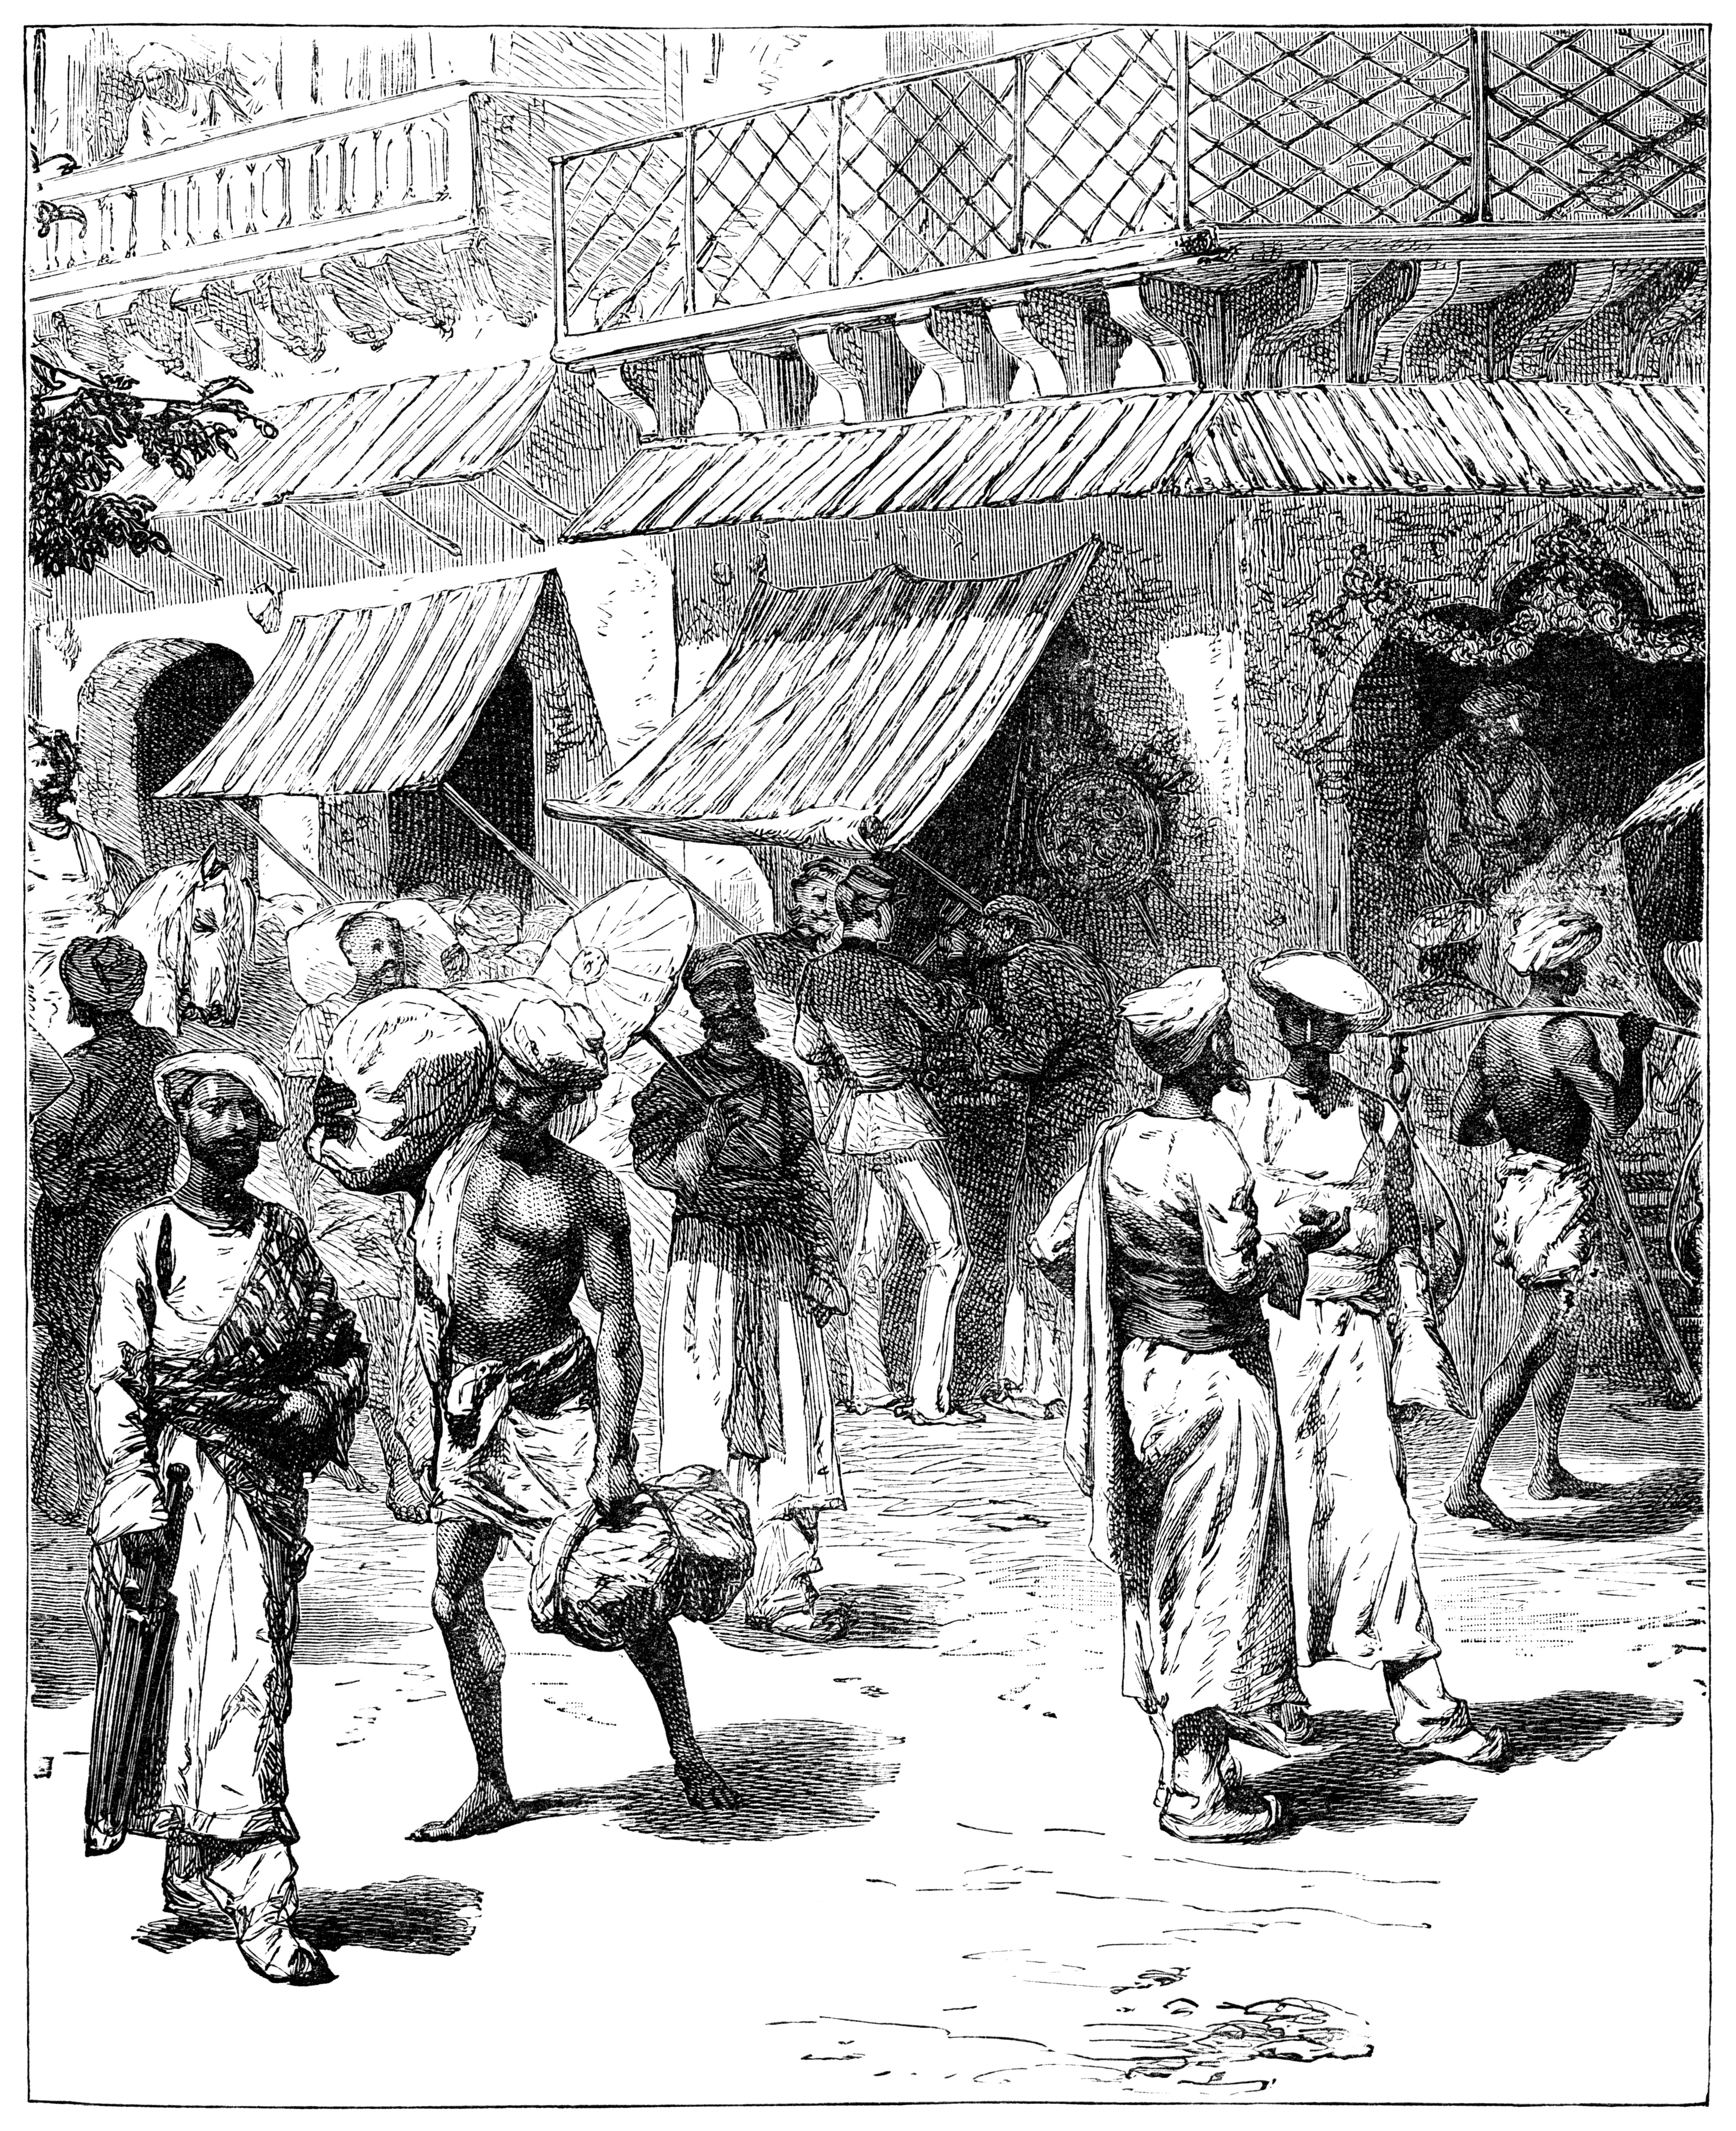 A street scene in Delhi during the British Raj, 1882.